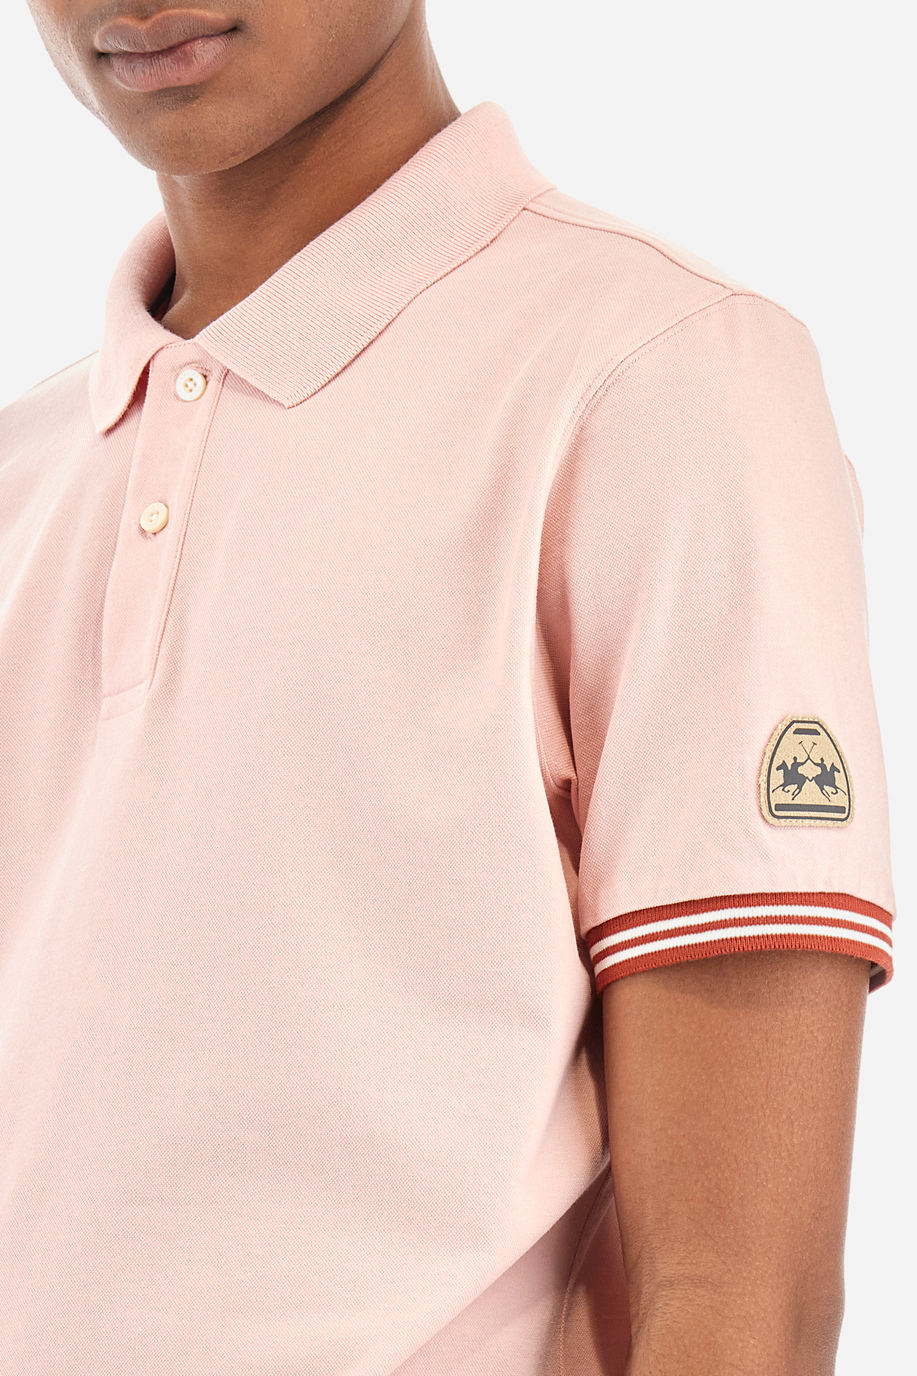 Herren-Poloshirt Regular Fit - Yanai - Frühlingskleidung für ihn | La Martina - Official Online Shop